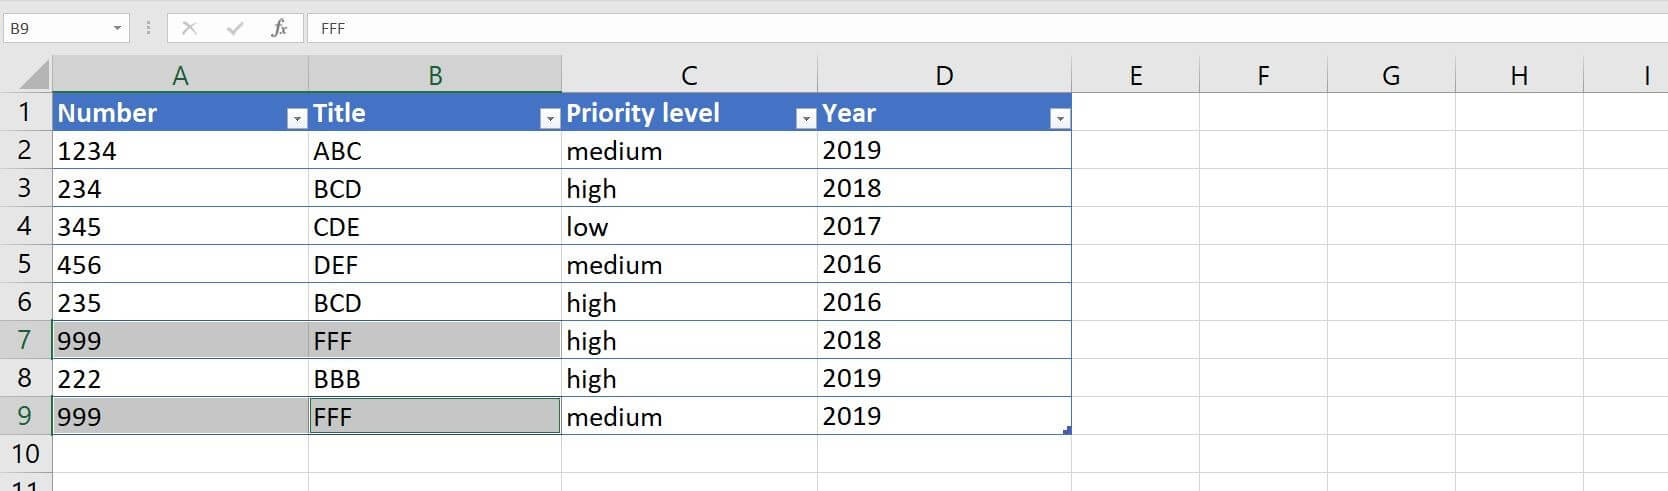 Excel 2016: esempio di voci con valori duplicati